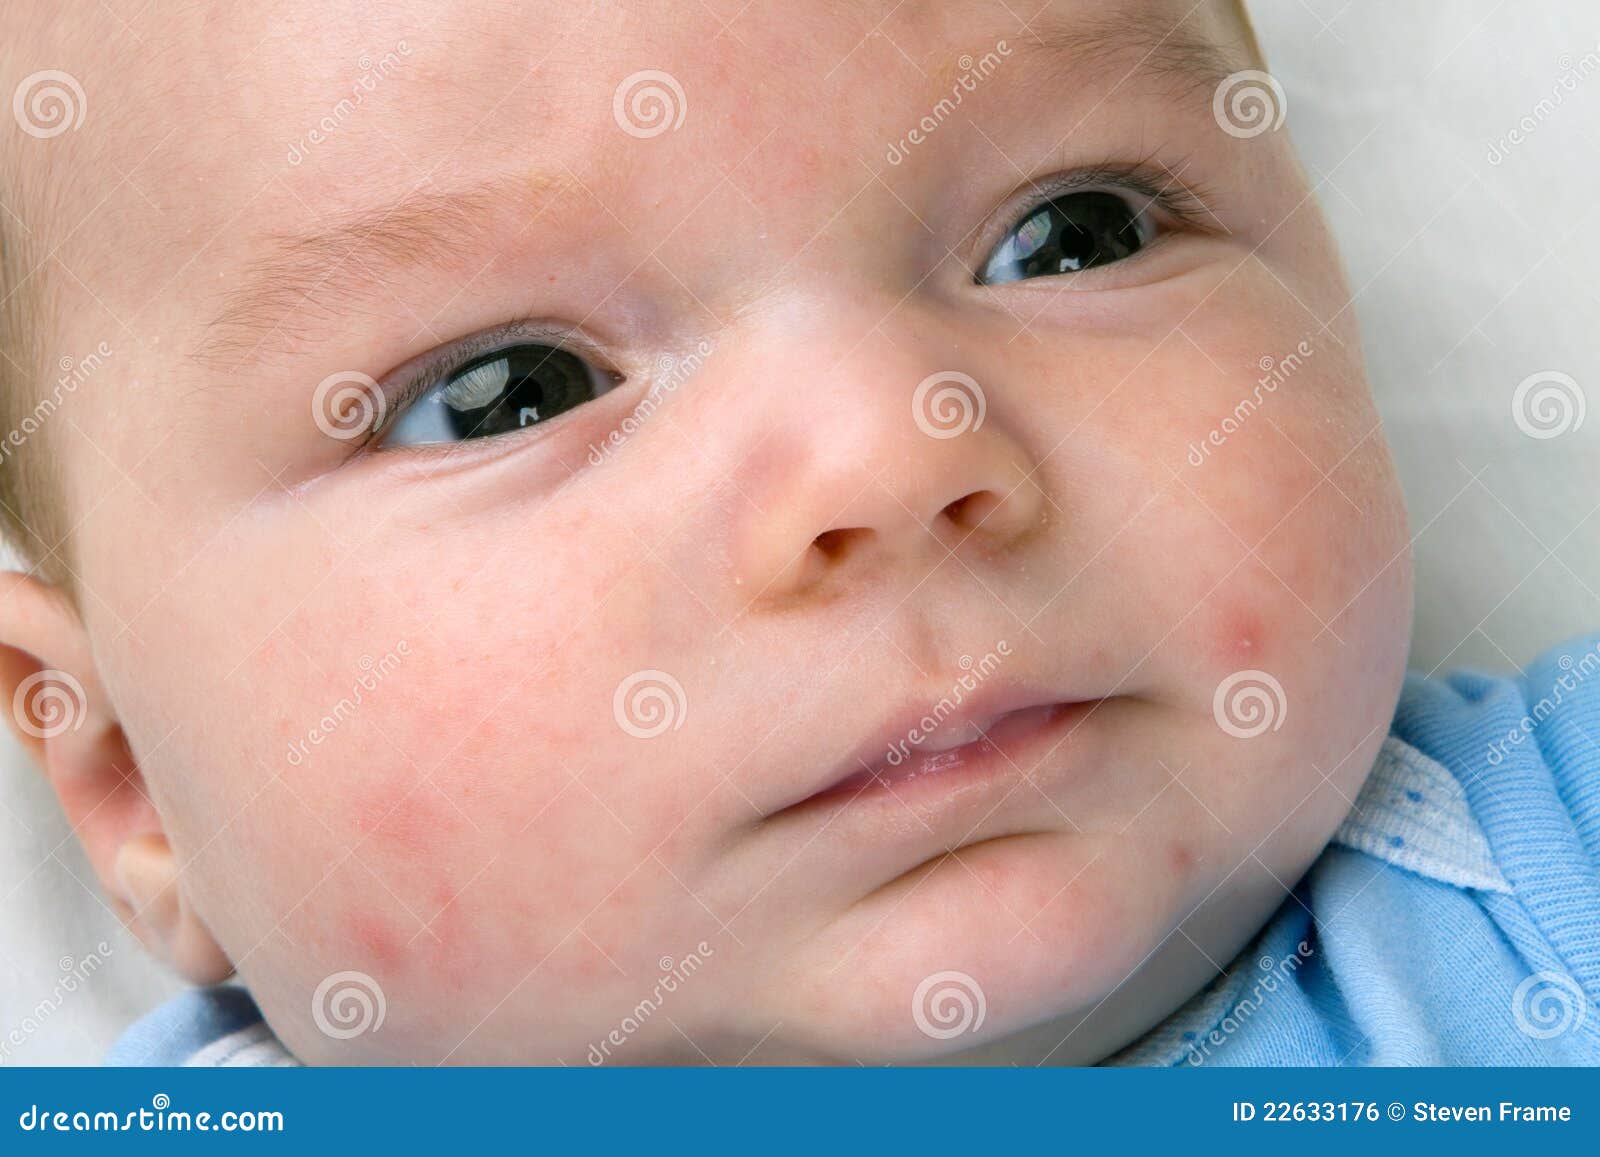 baby acne on newborn